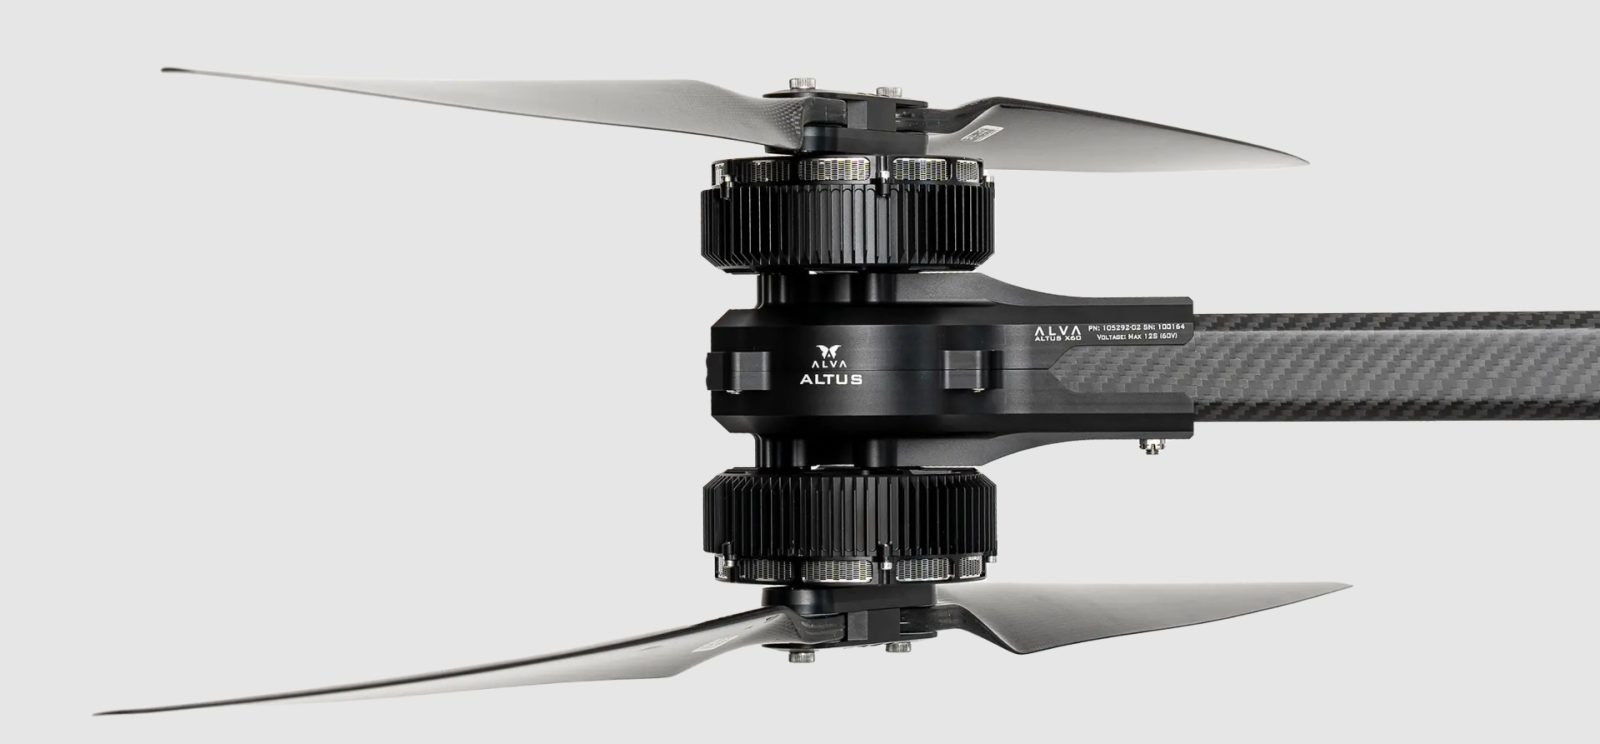 alva drone propulsion system